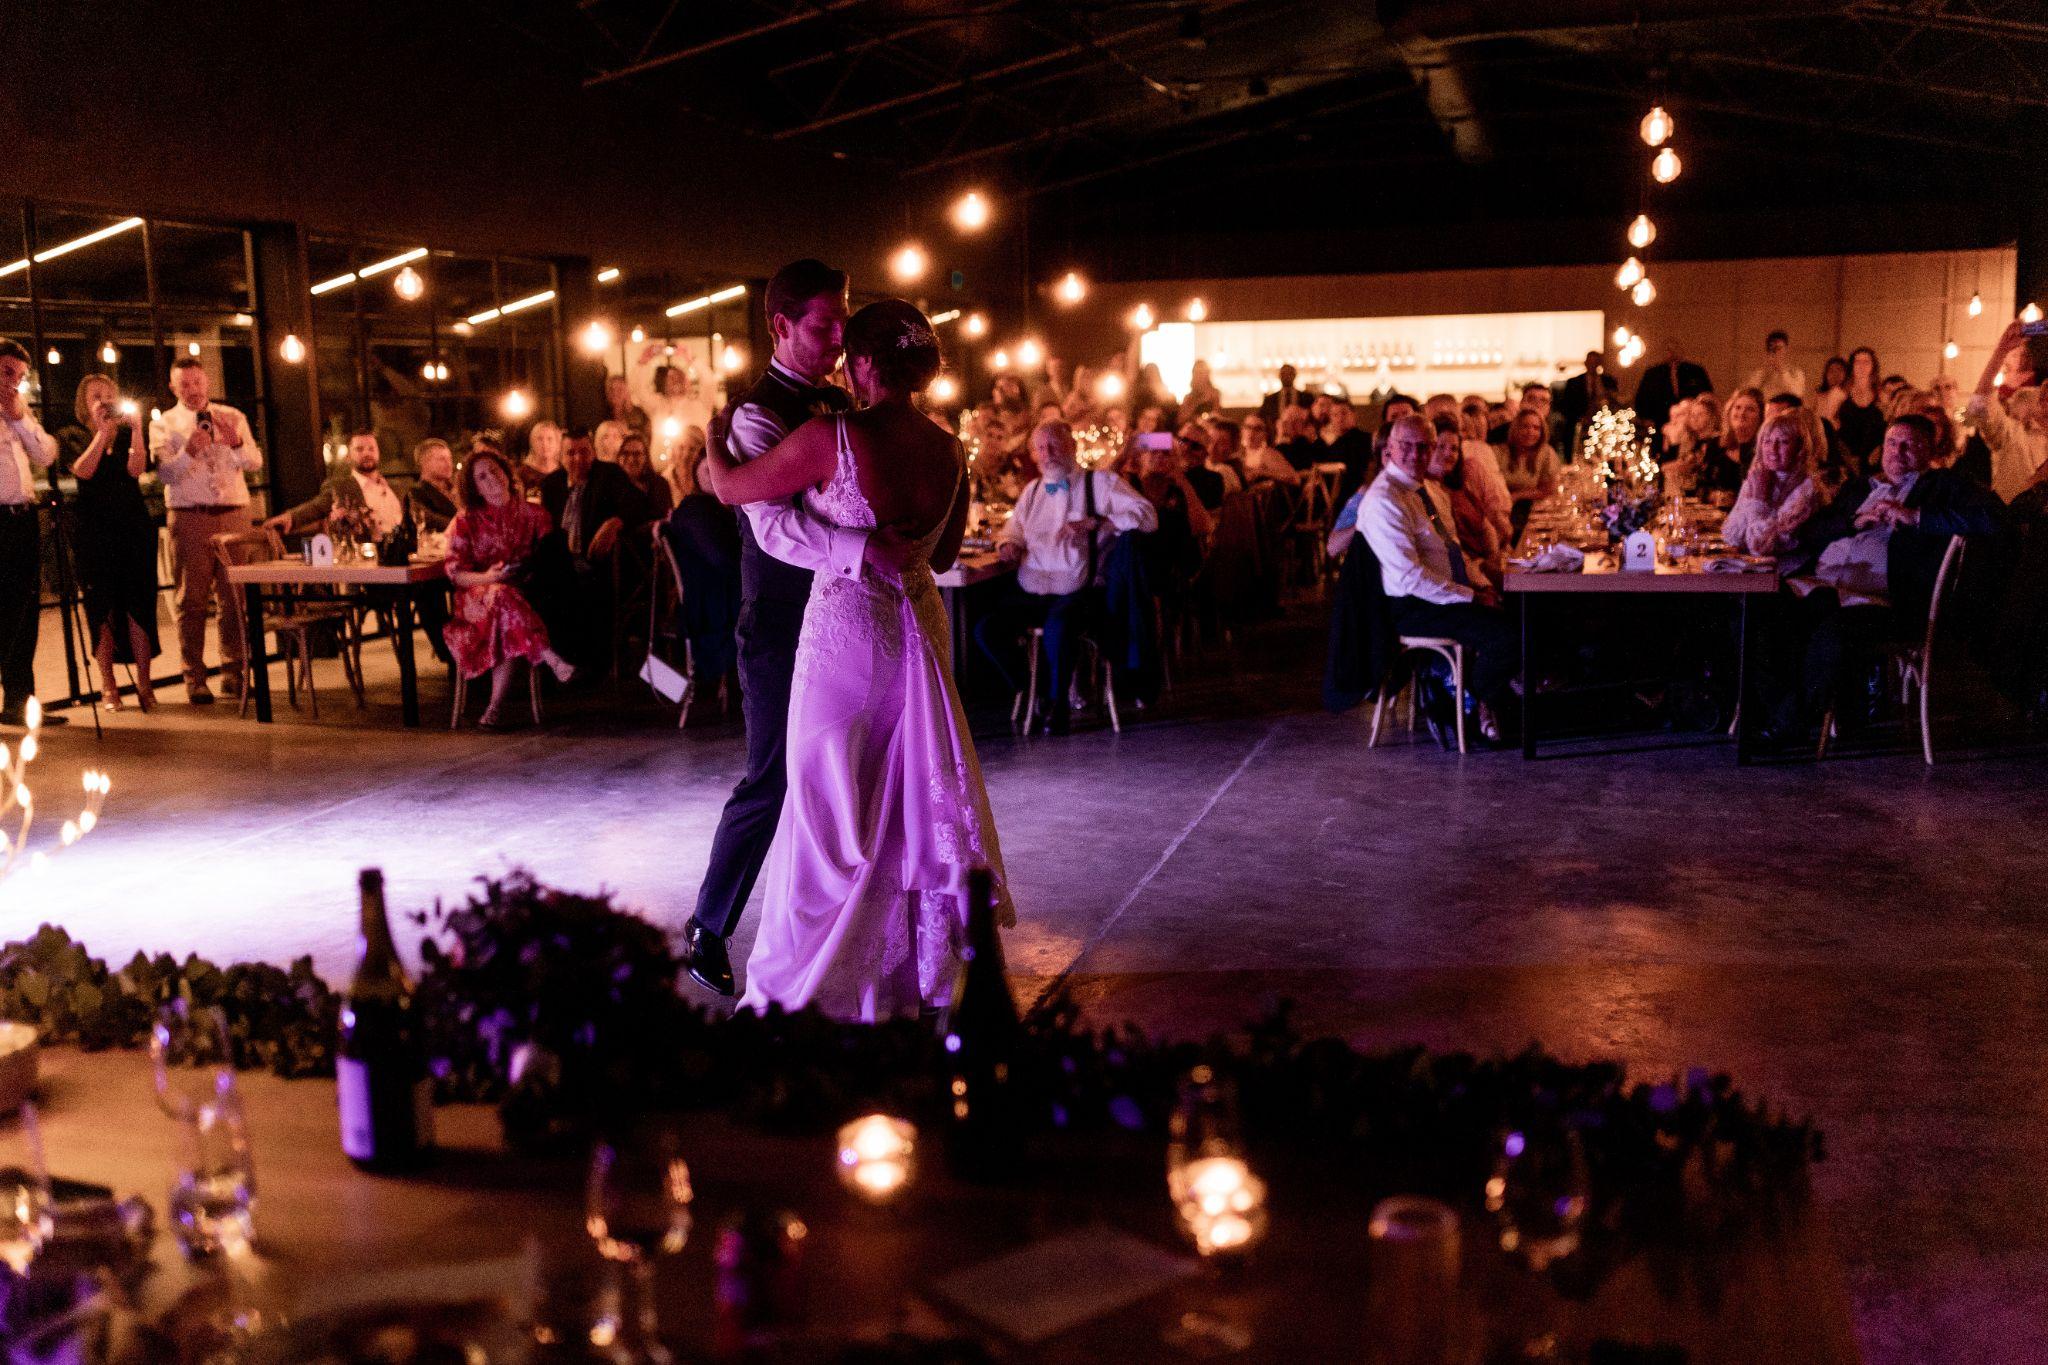 Jenna and Hayden wedding dance on their wedding day at Peter Lehmann’s vineyard. 